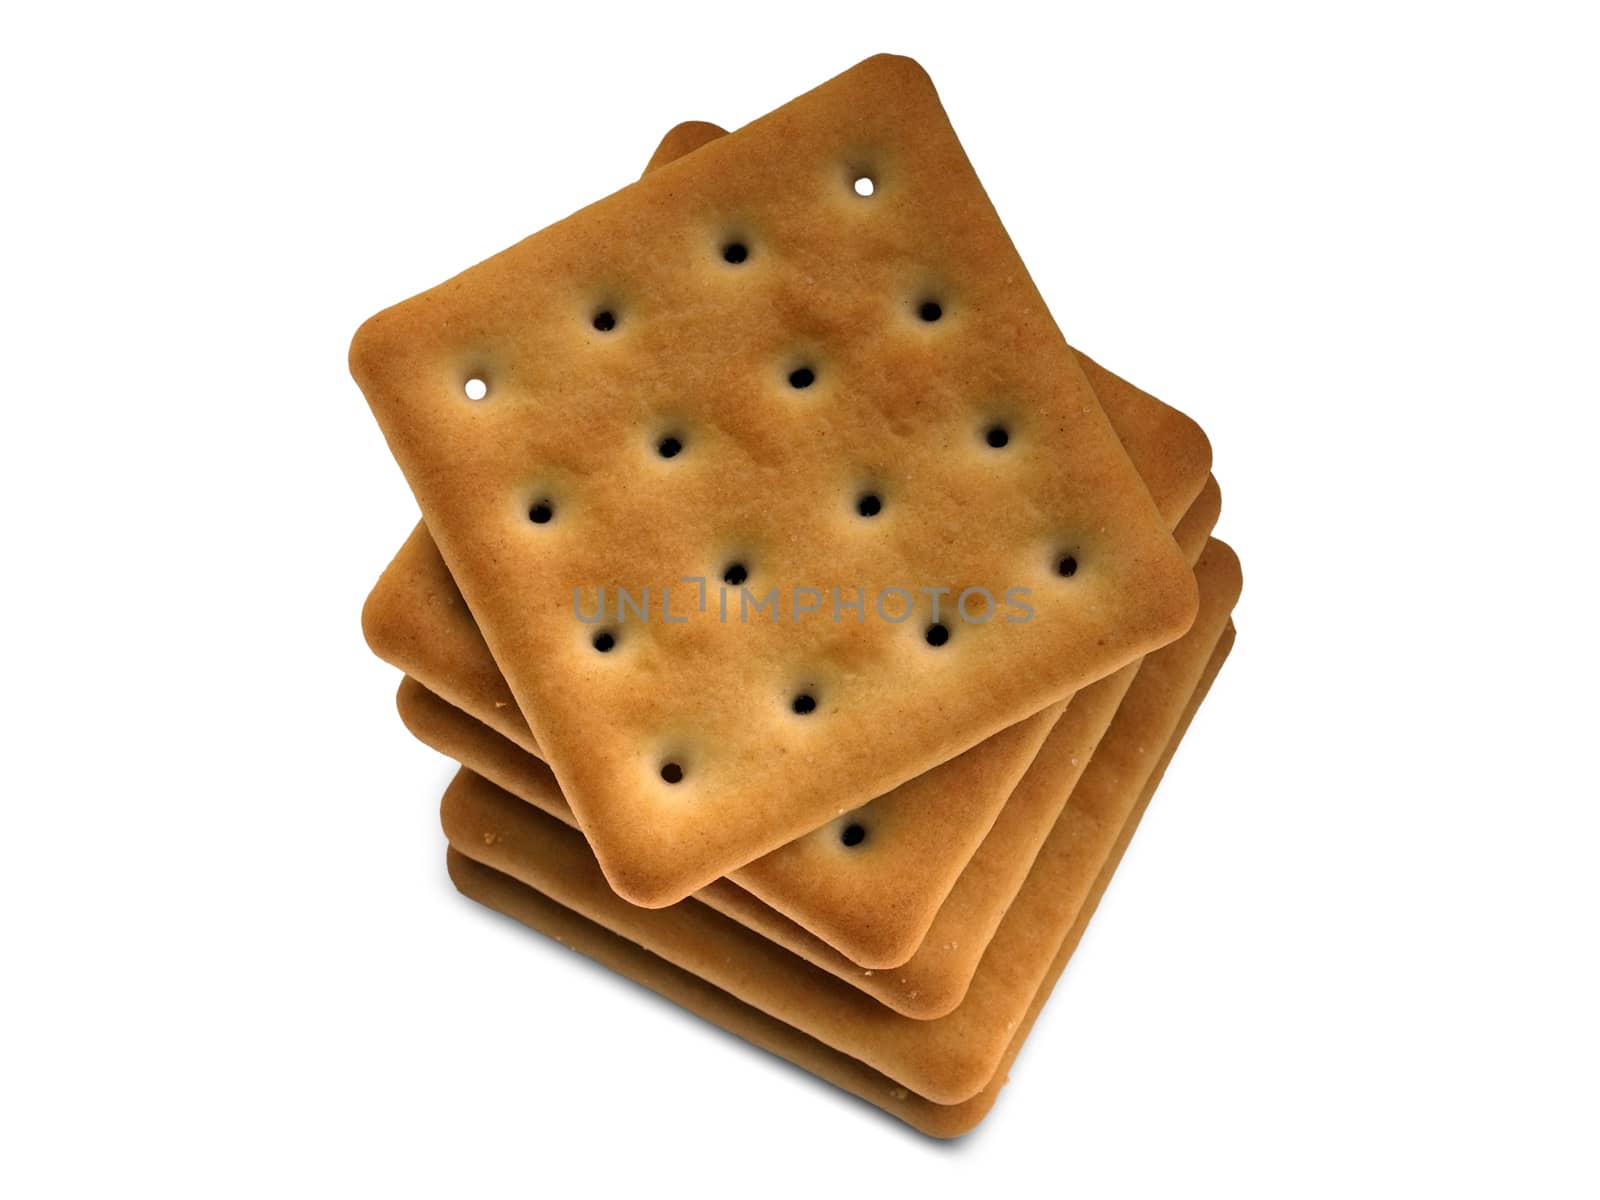 crackers pile by Venakr